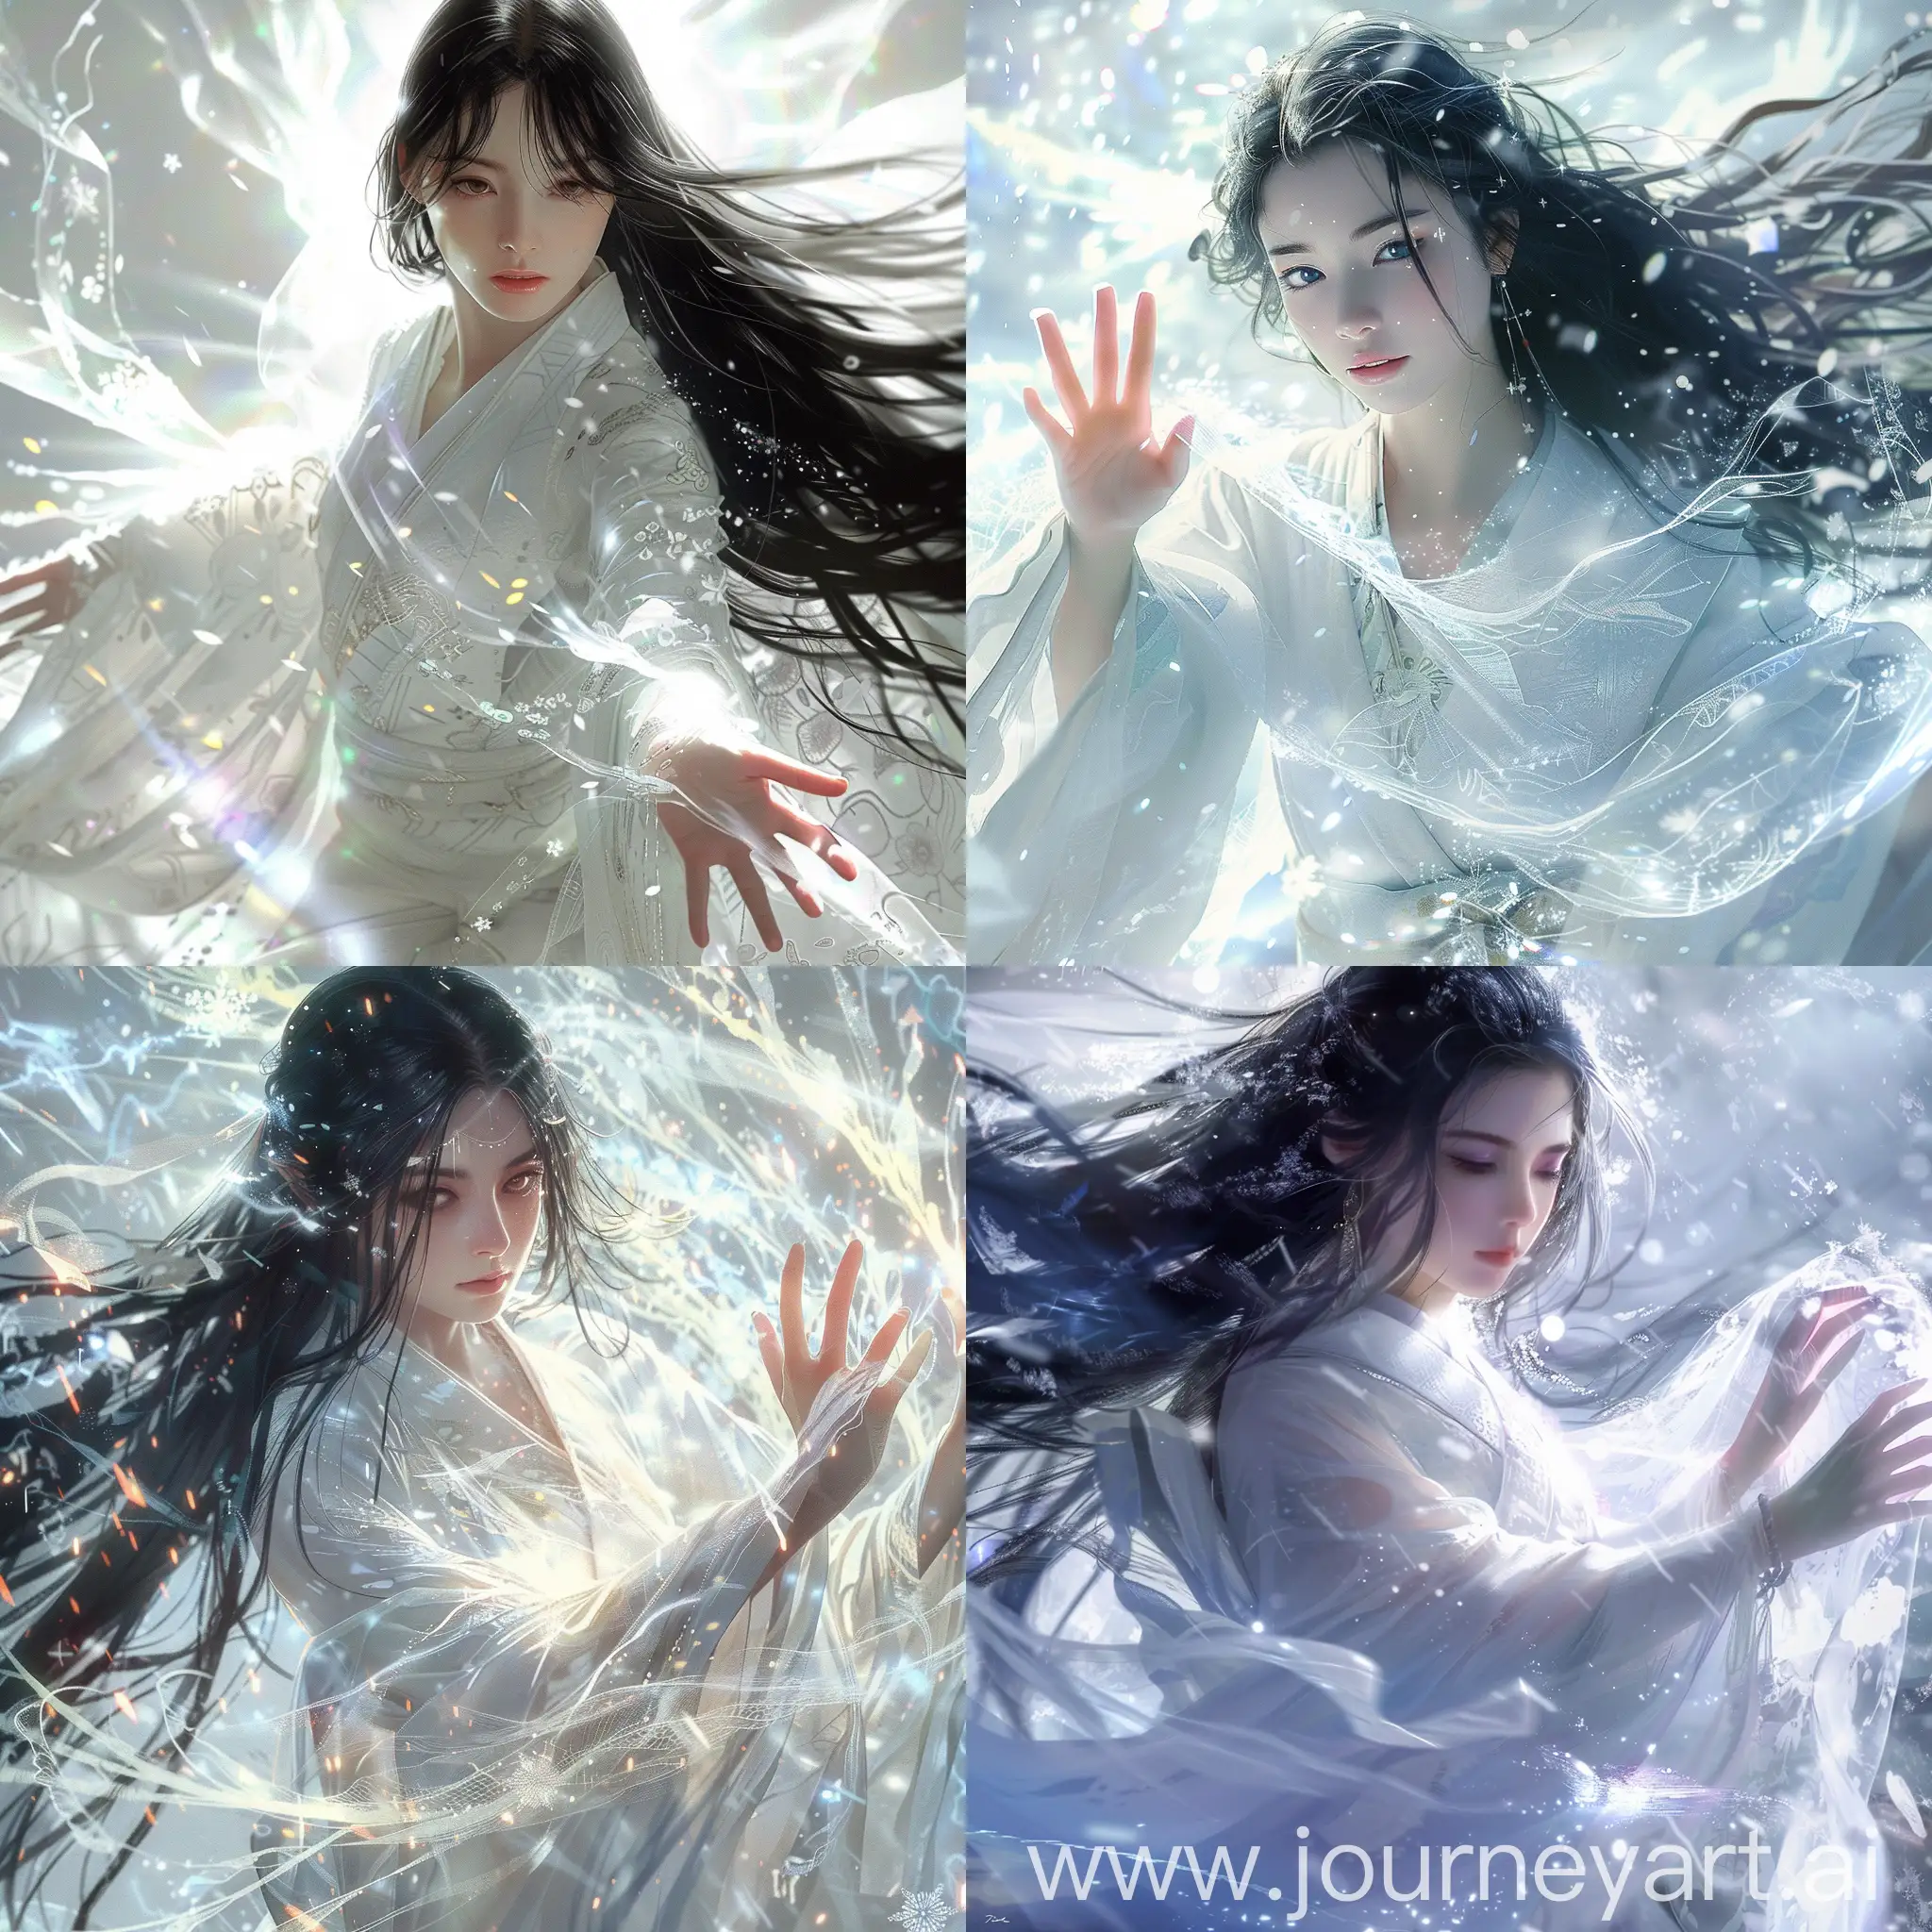 Enchanting-Winter-Spirit-Japanese-Mythology-Art-with-Cinematic-Light-and-Vivid-Colors